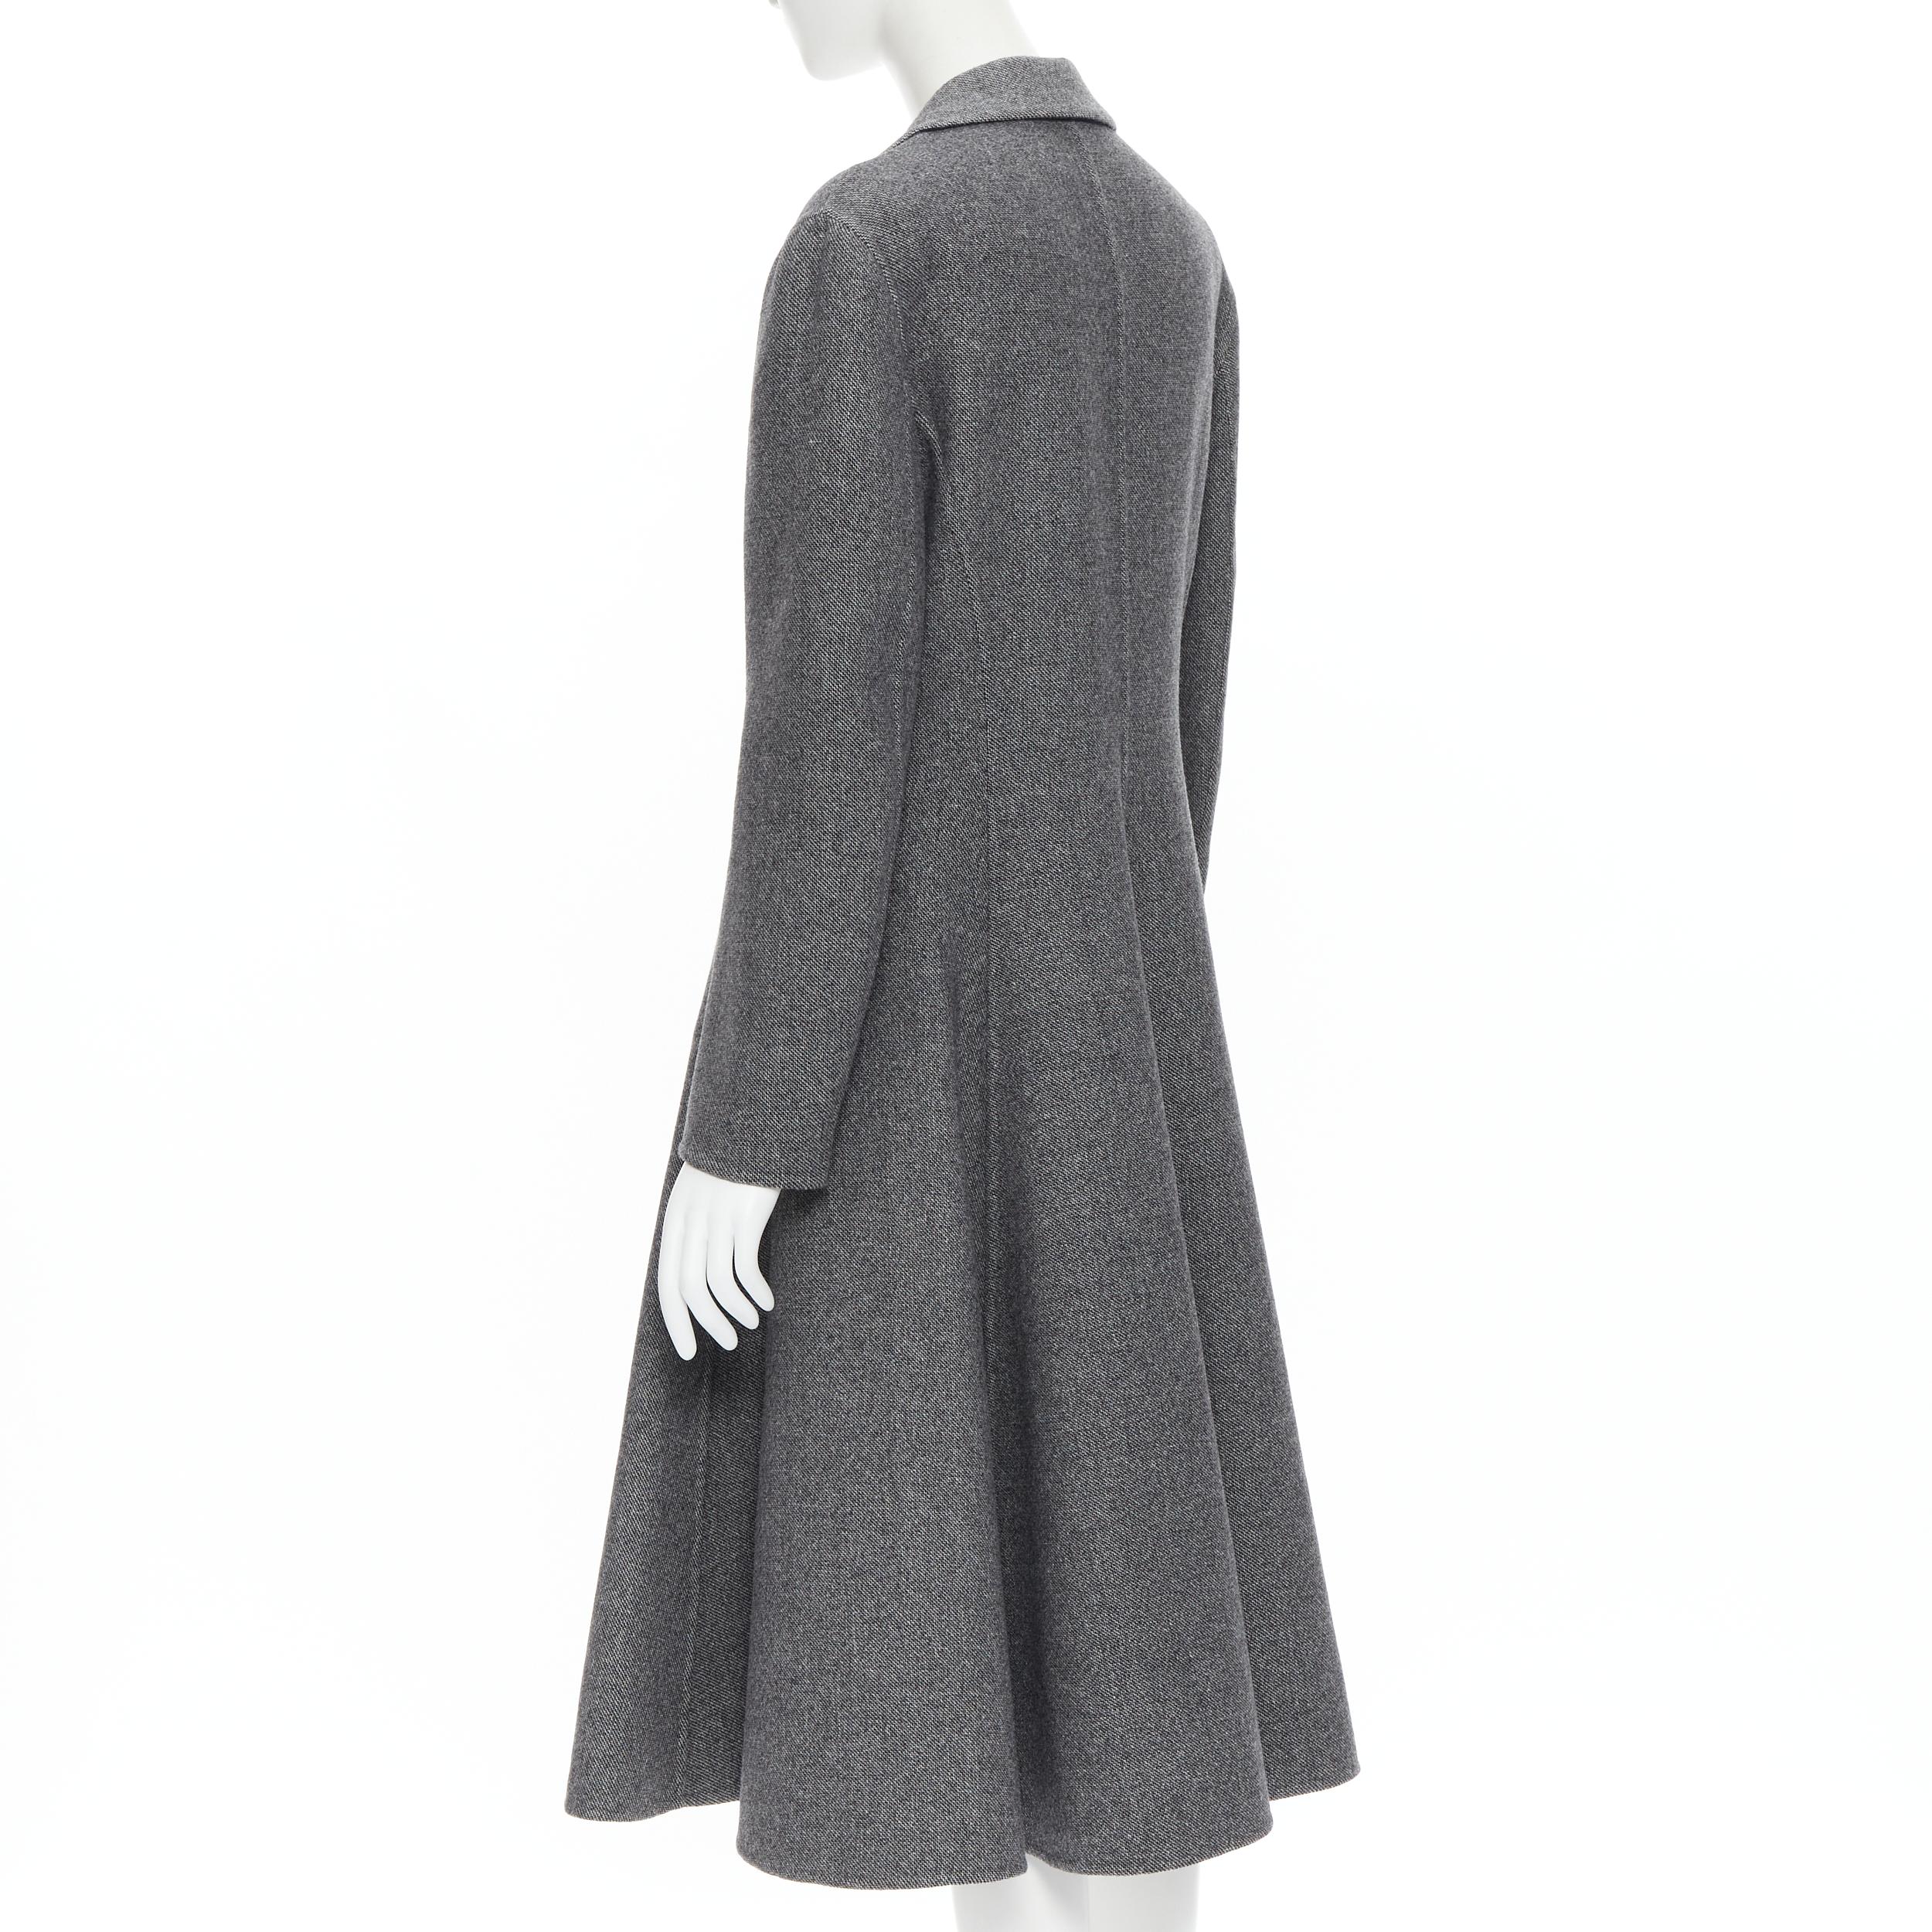 Gray CHRISTIAN DIOR grey wool classic fit flared blazer swing coat dress FR42 L